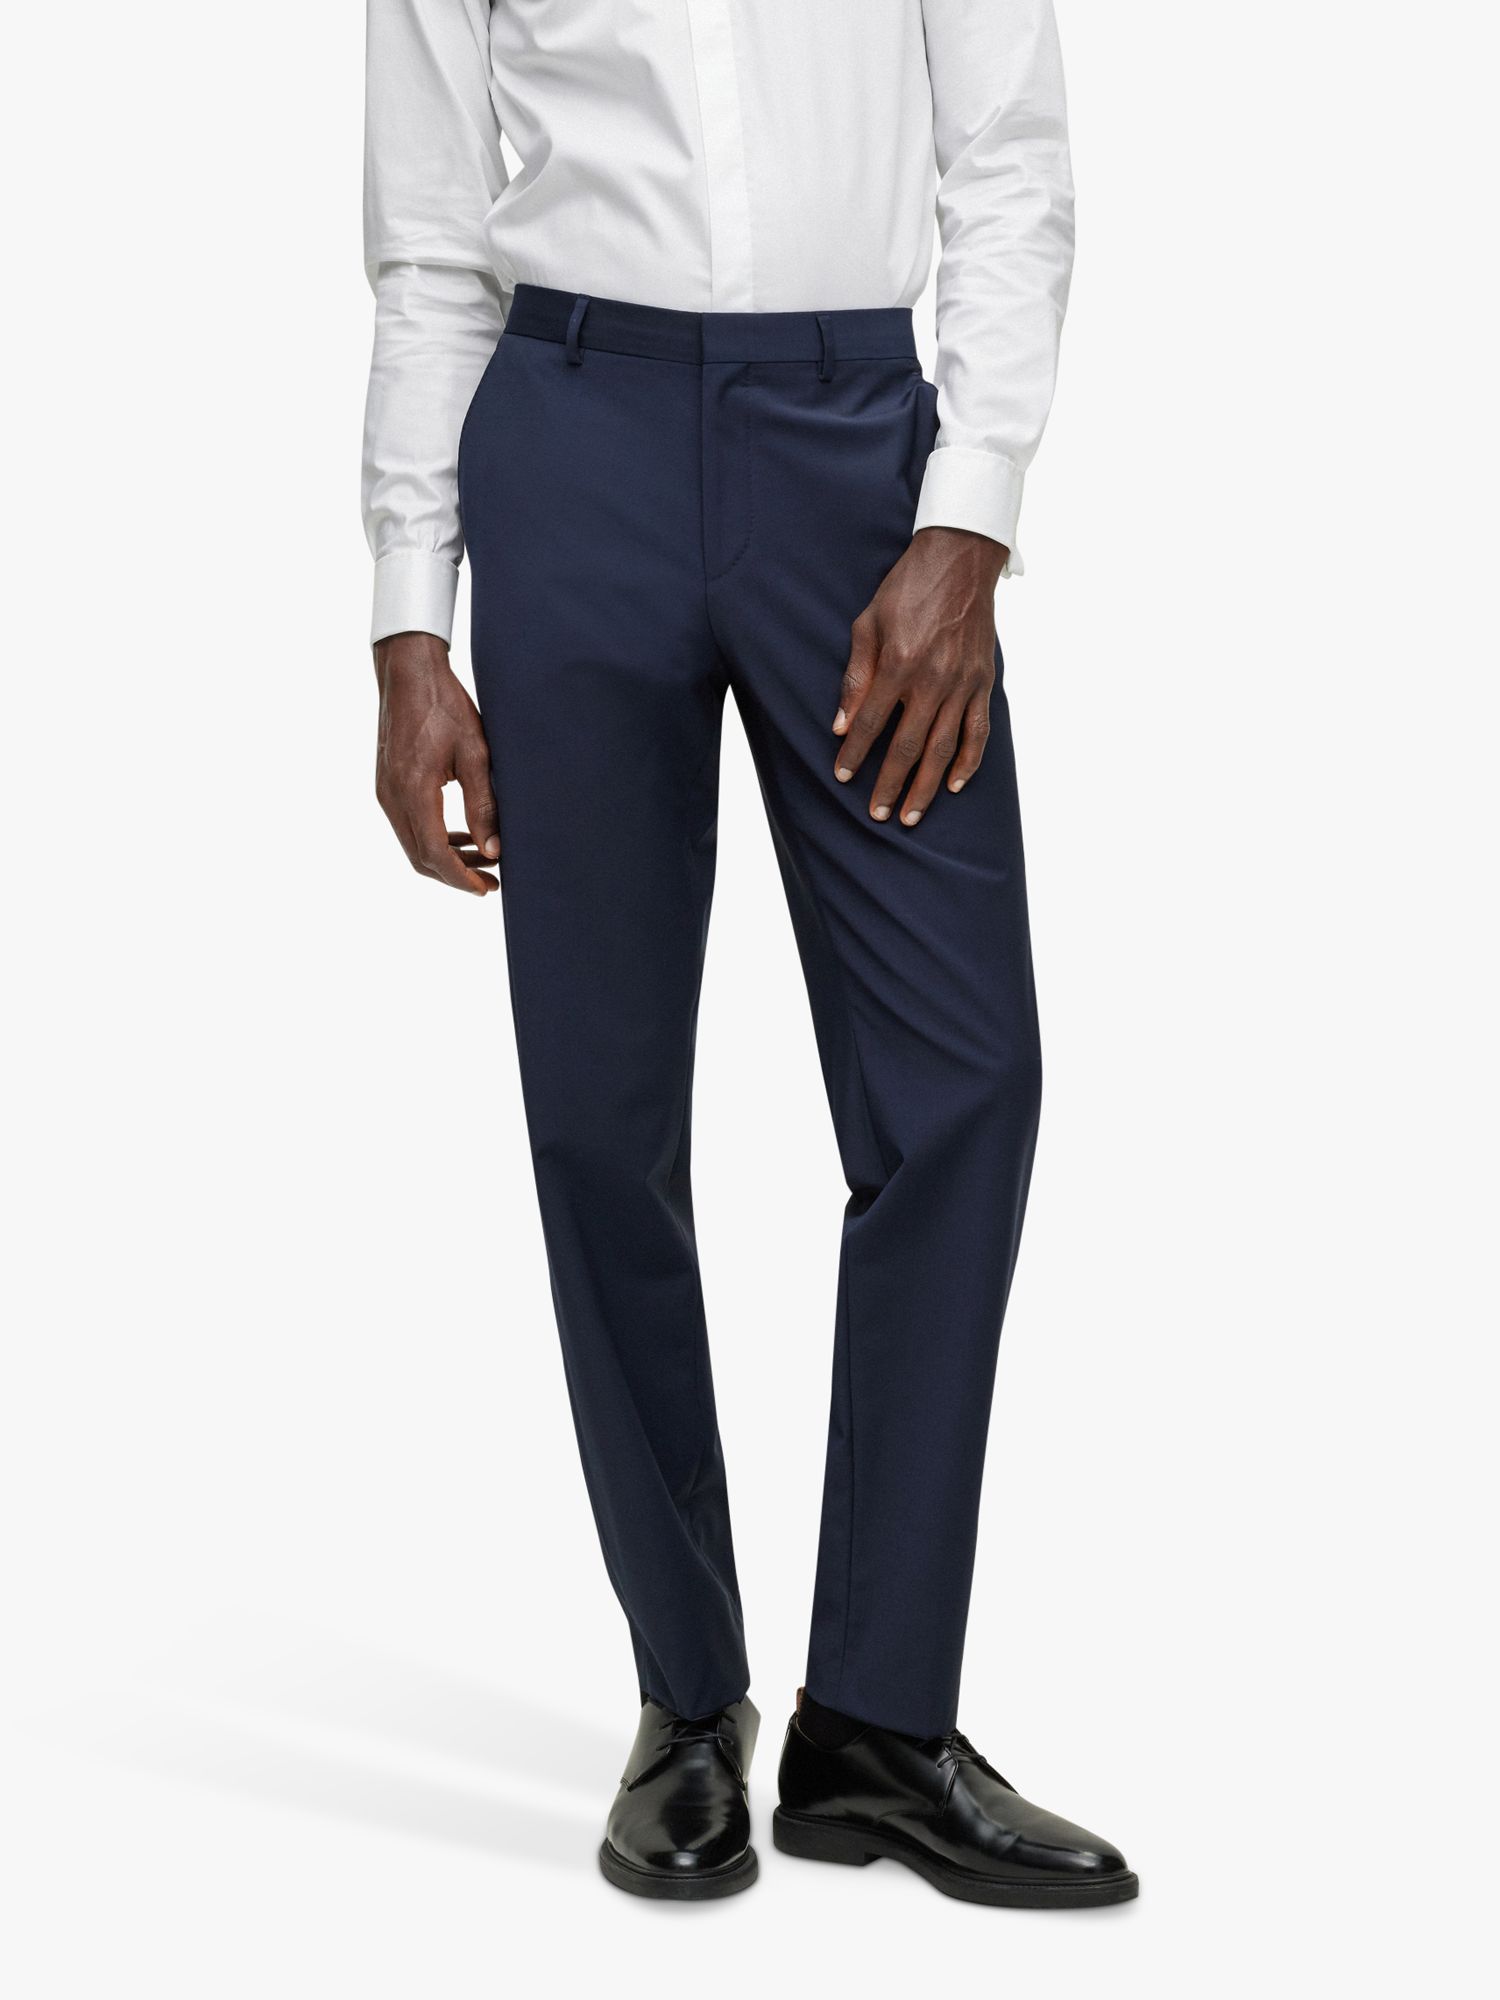 HUGO BOSS Leon Regular Fit Wool Blend Suit Trousers, Dark Blue, 30R